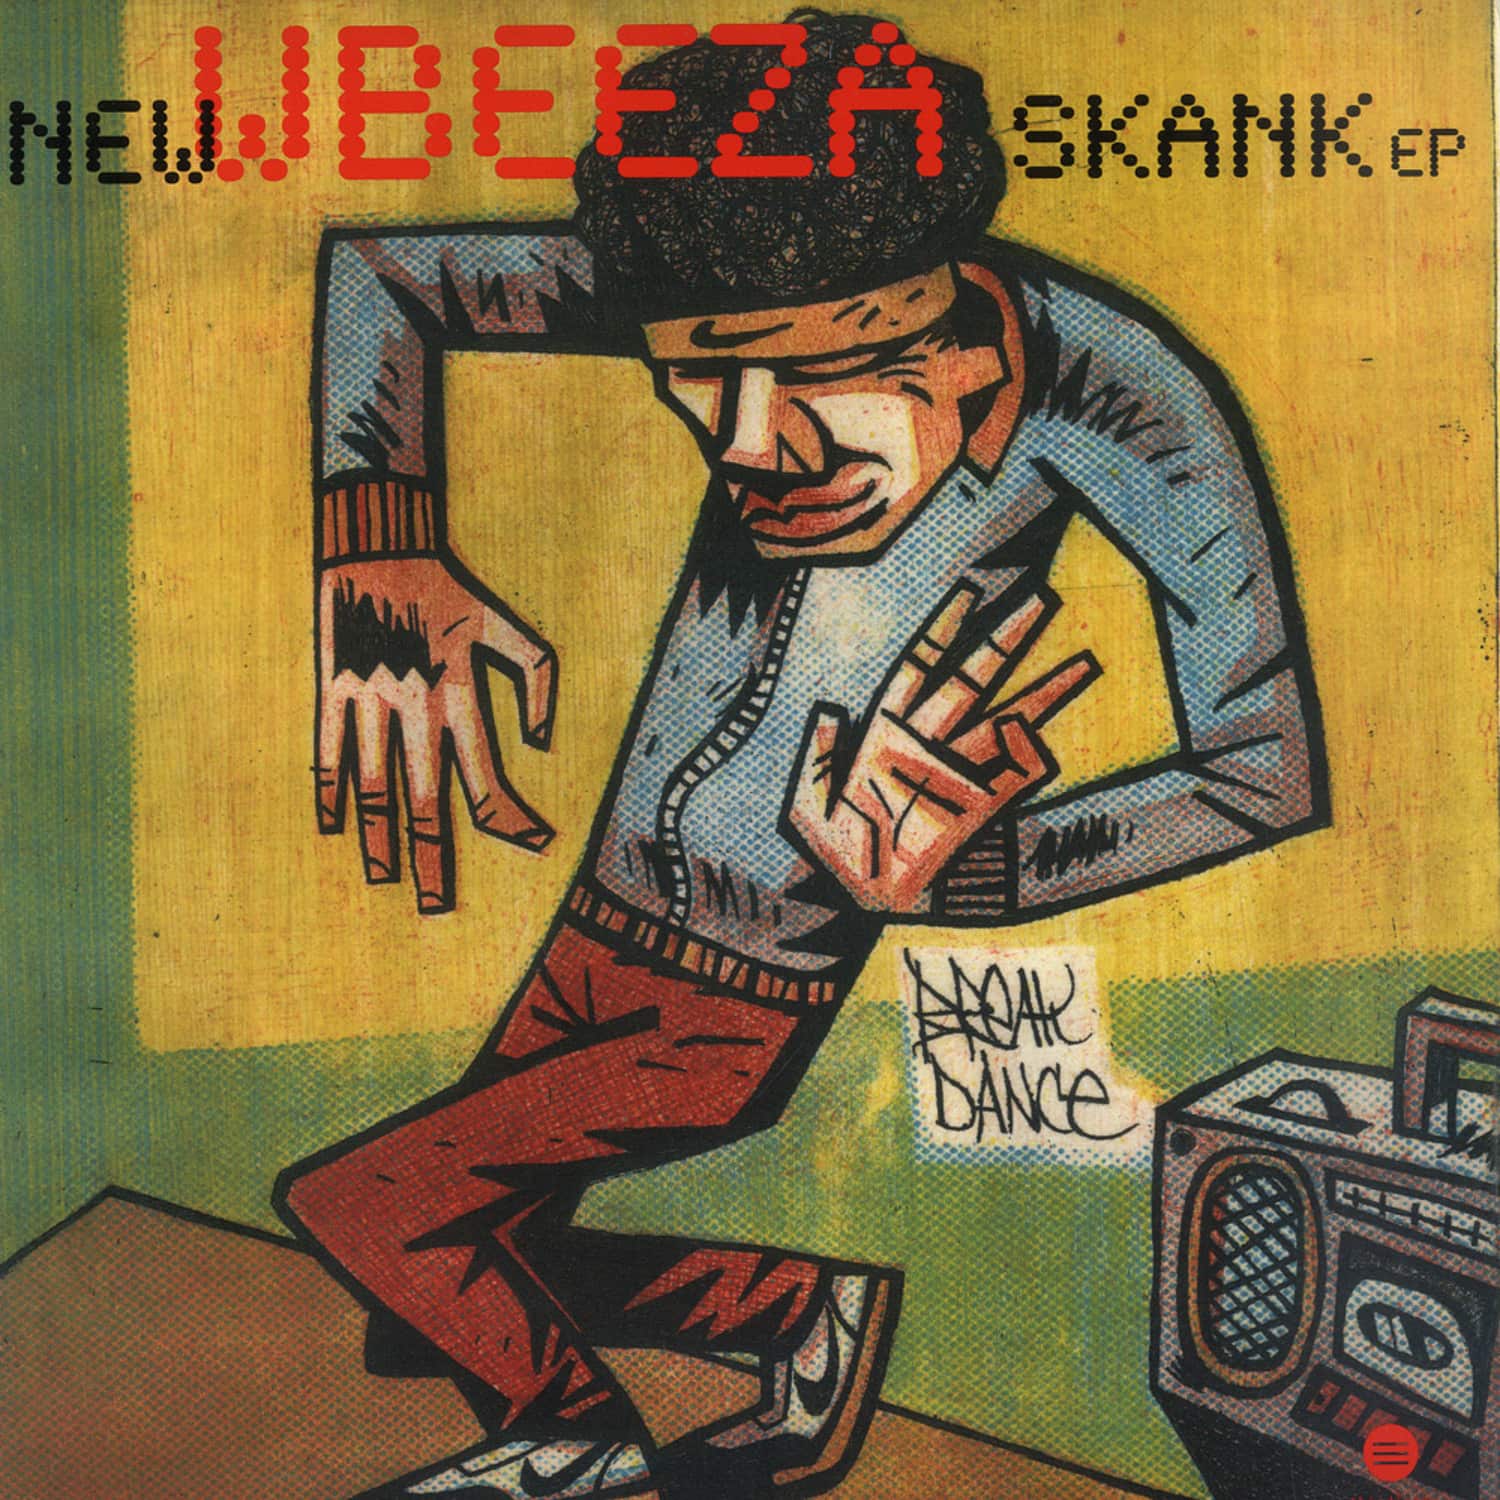 Wbeeza - NEW SKANK EP